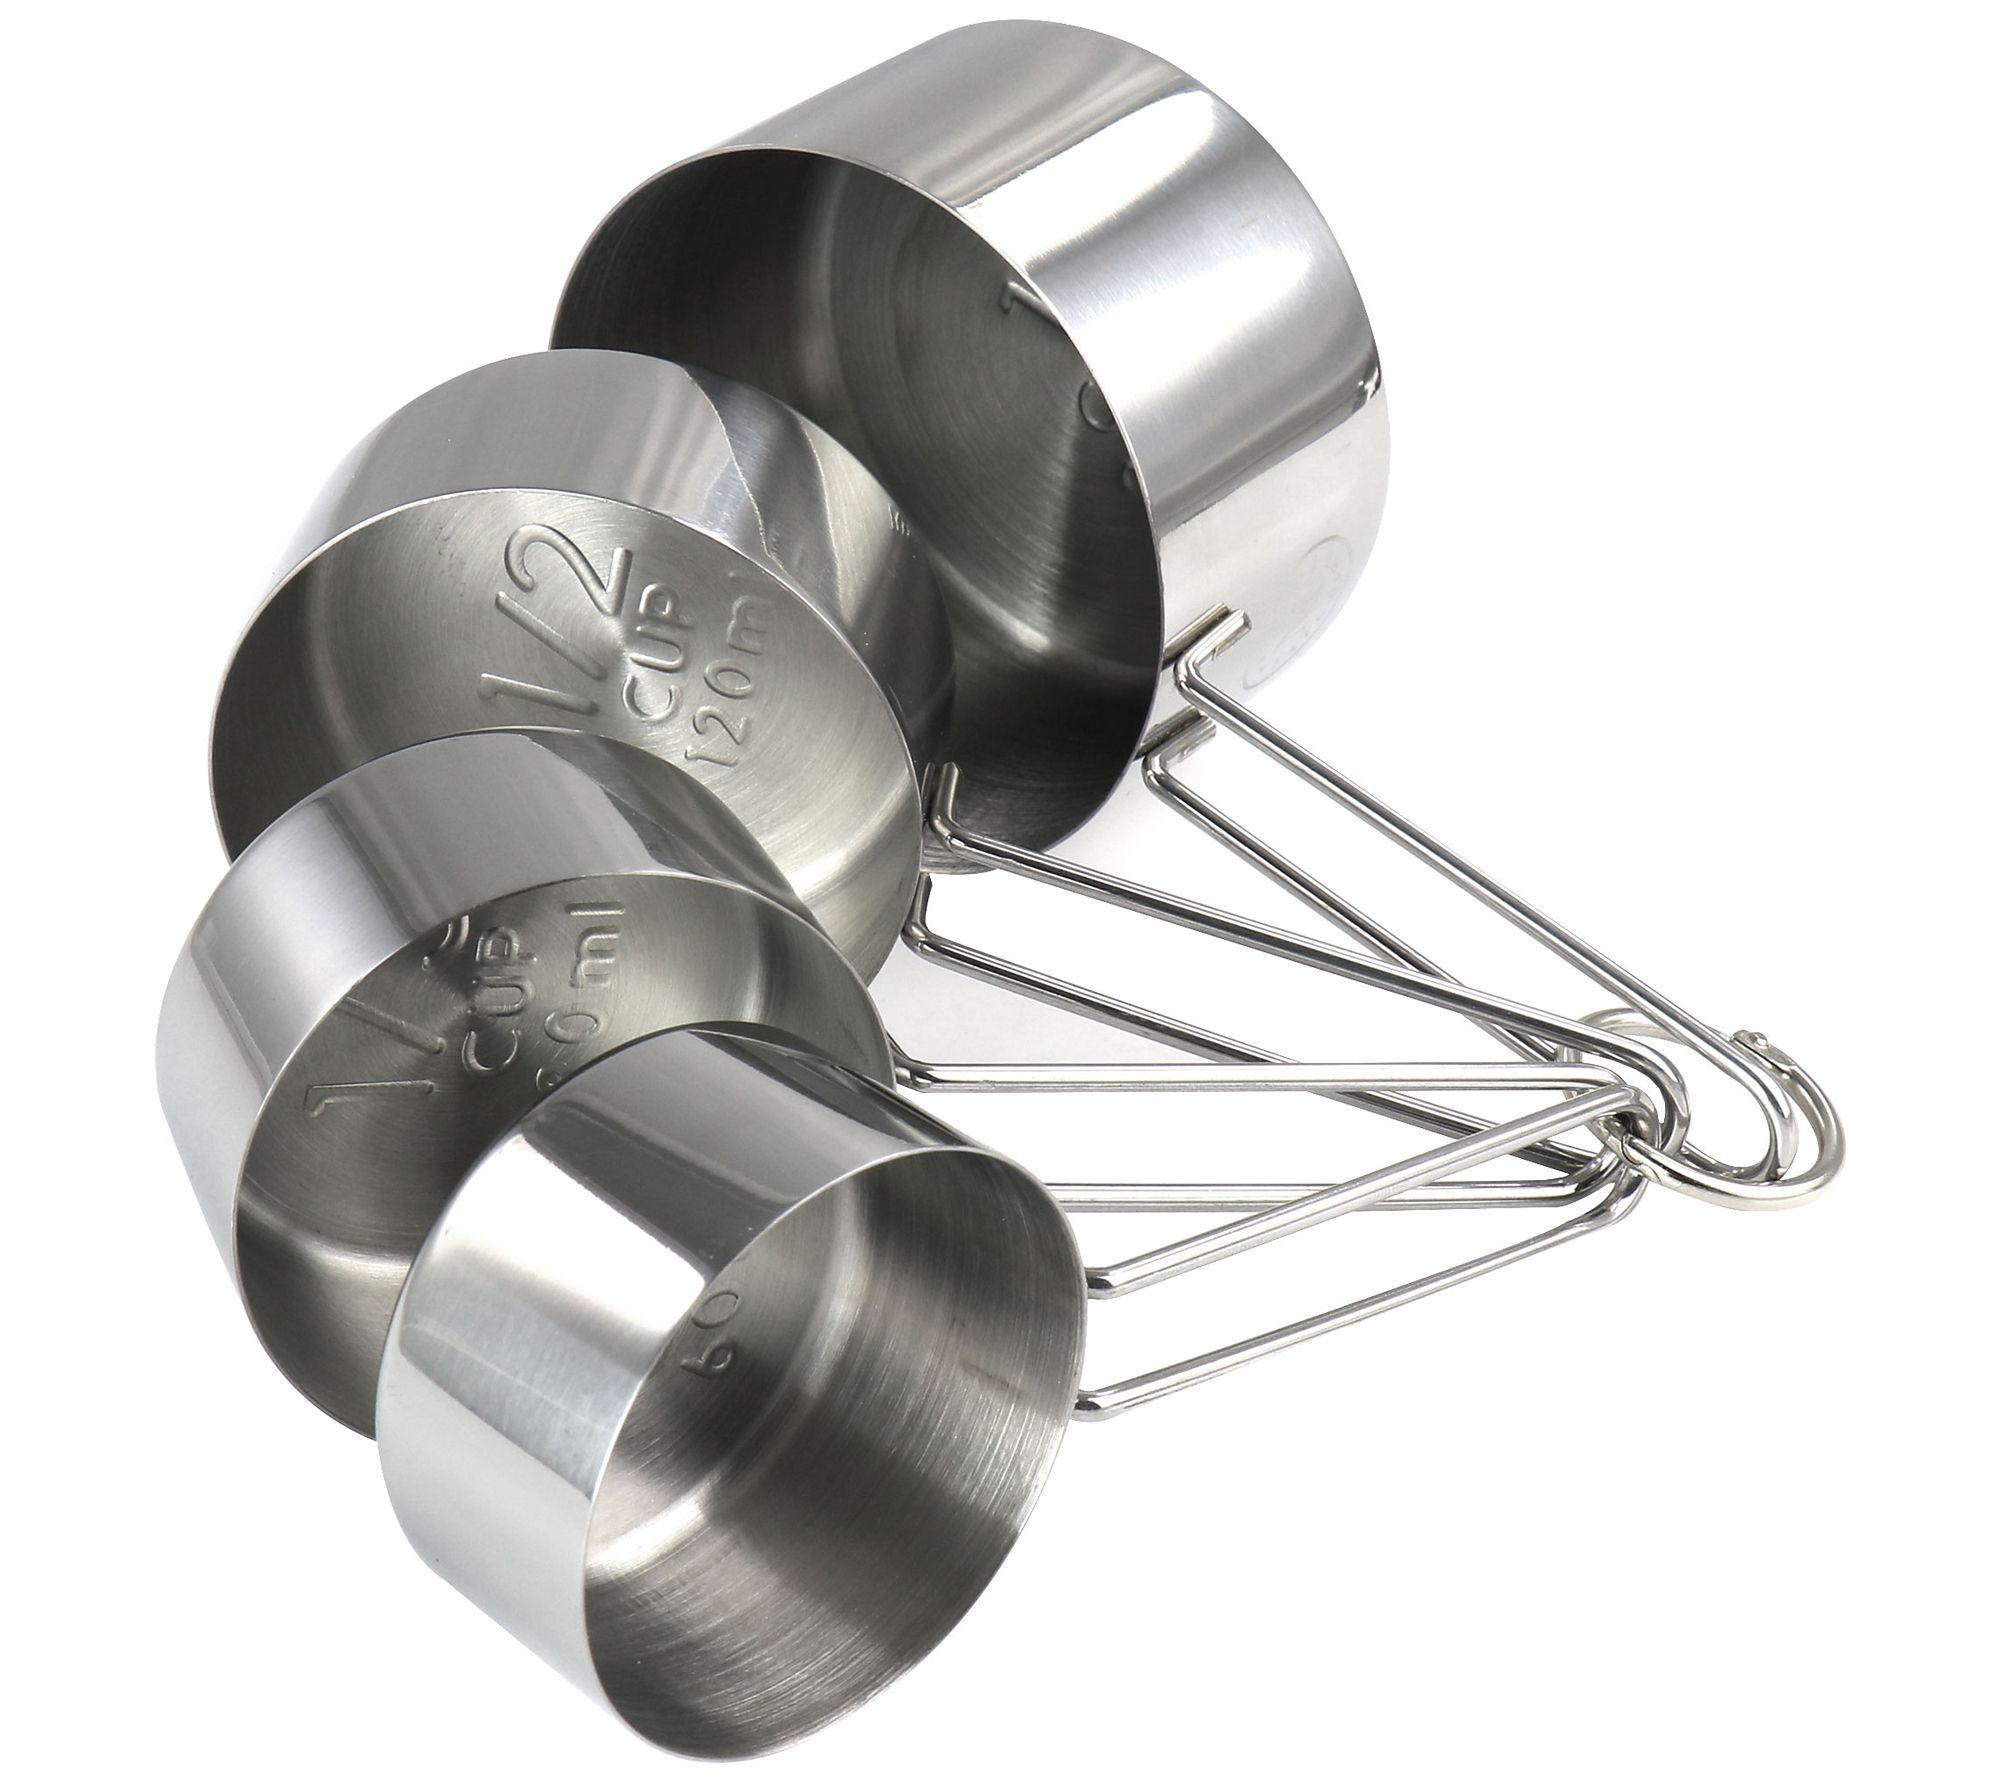 Cuisinart : Measuring Cups & Measuring Spoons : Target